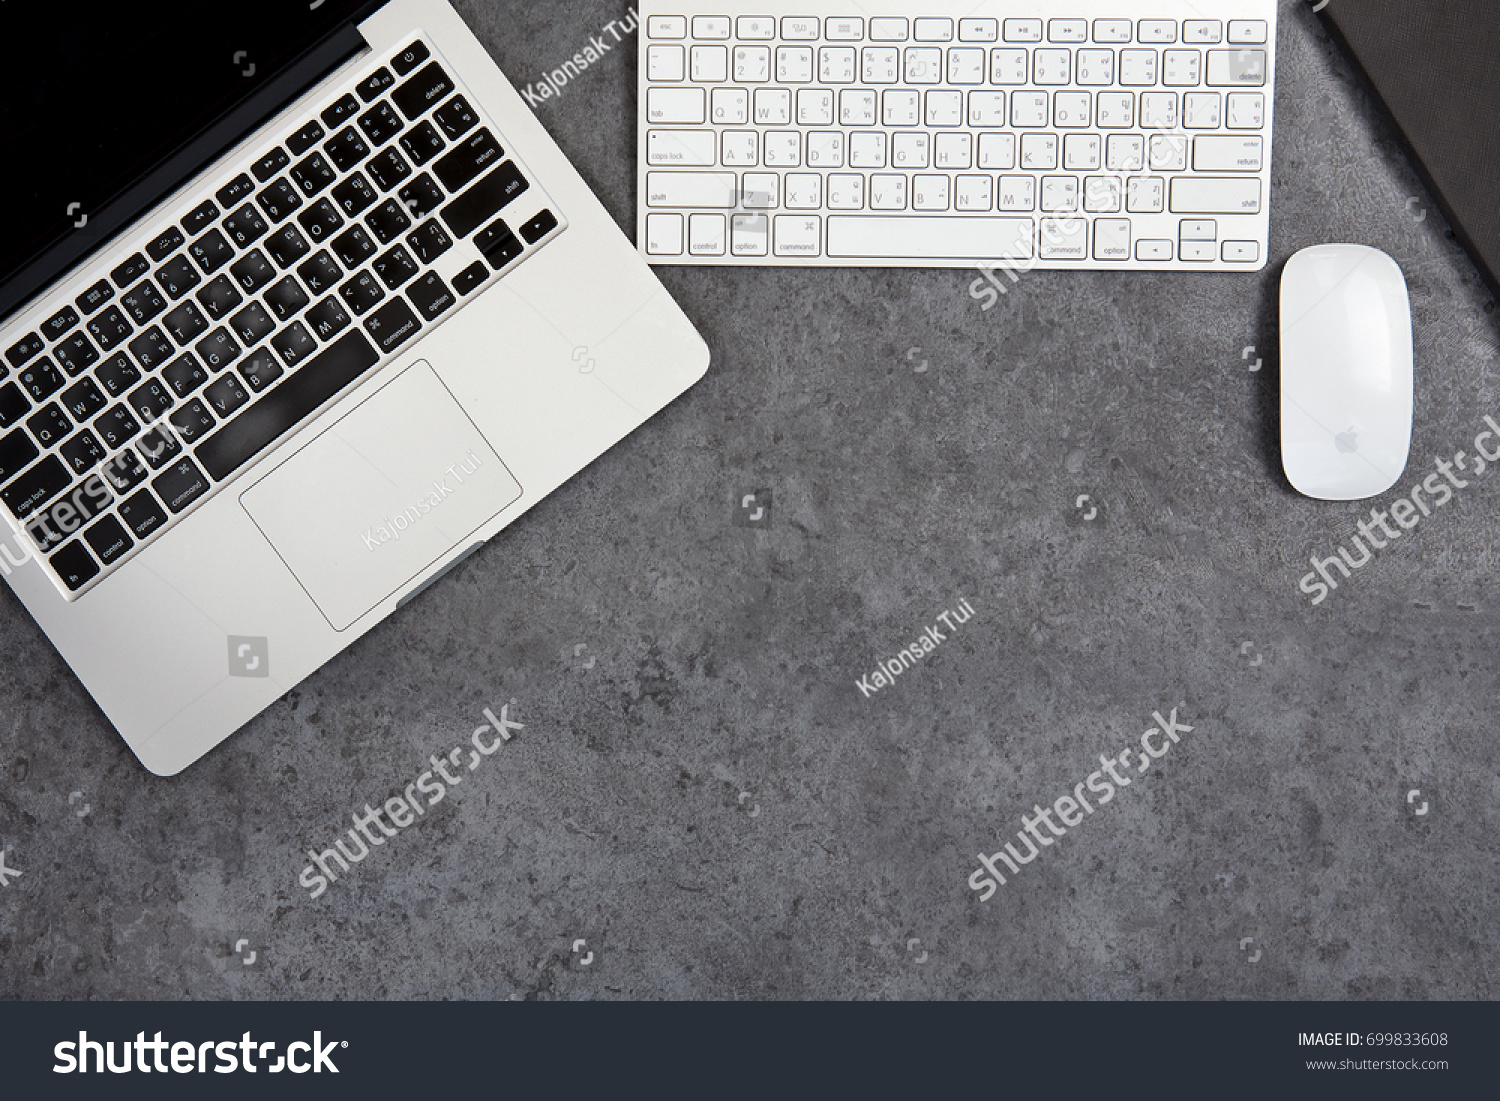 Granite Office Desk Table Laptop Open Stock Photo Edit Now 699833608